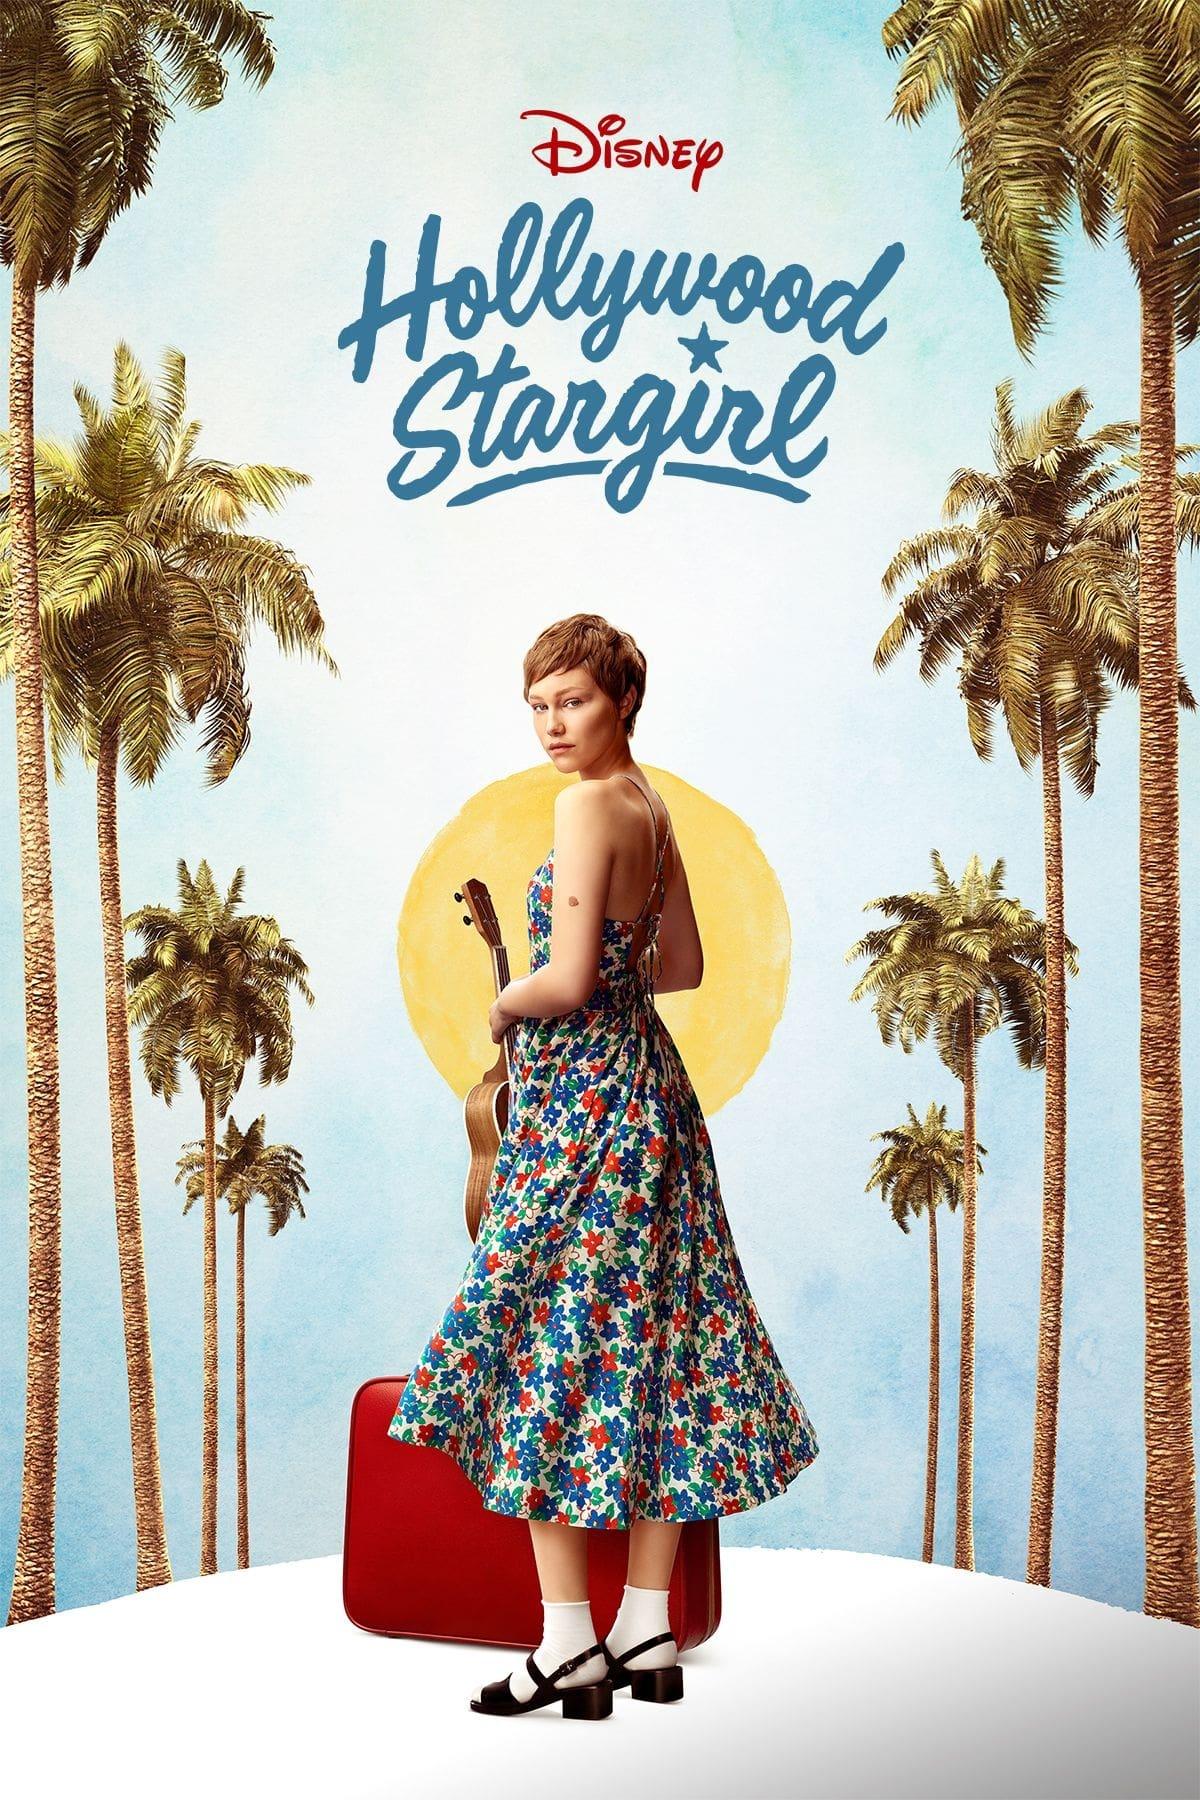 Hollywood Stargirl poster